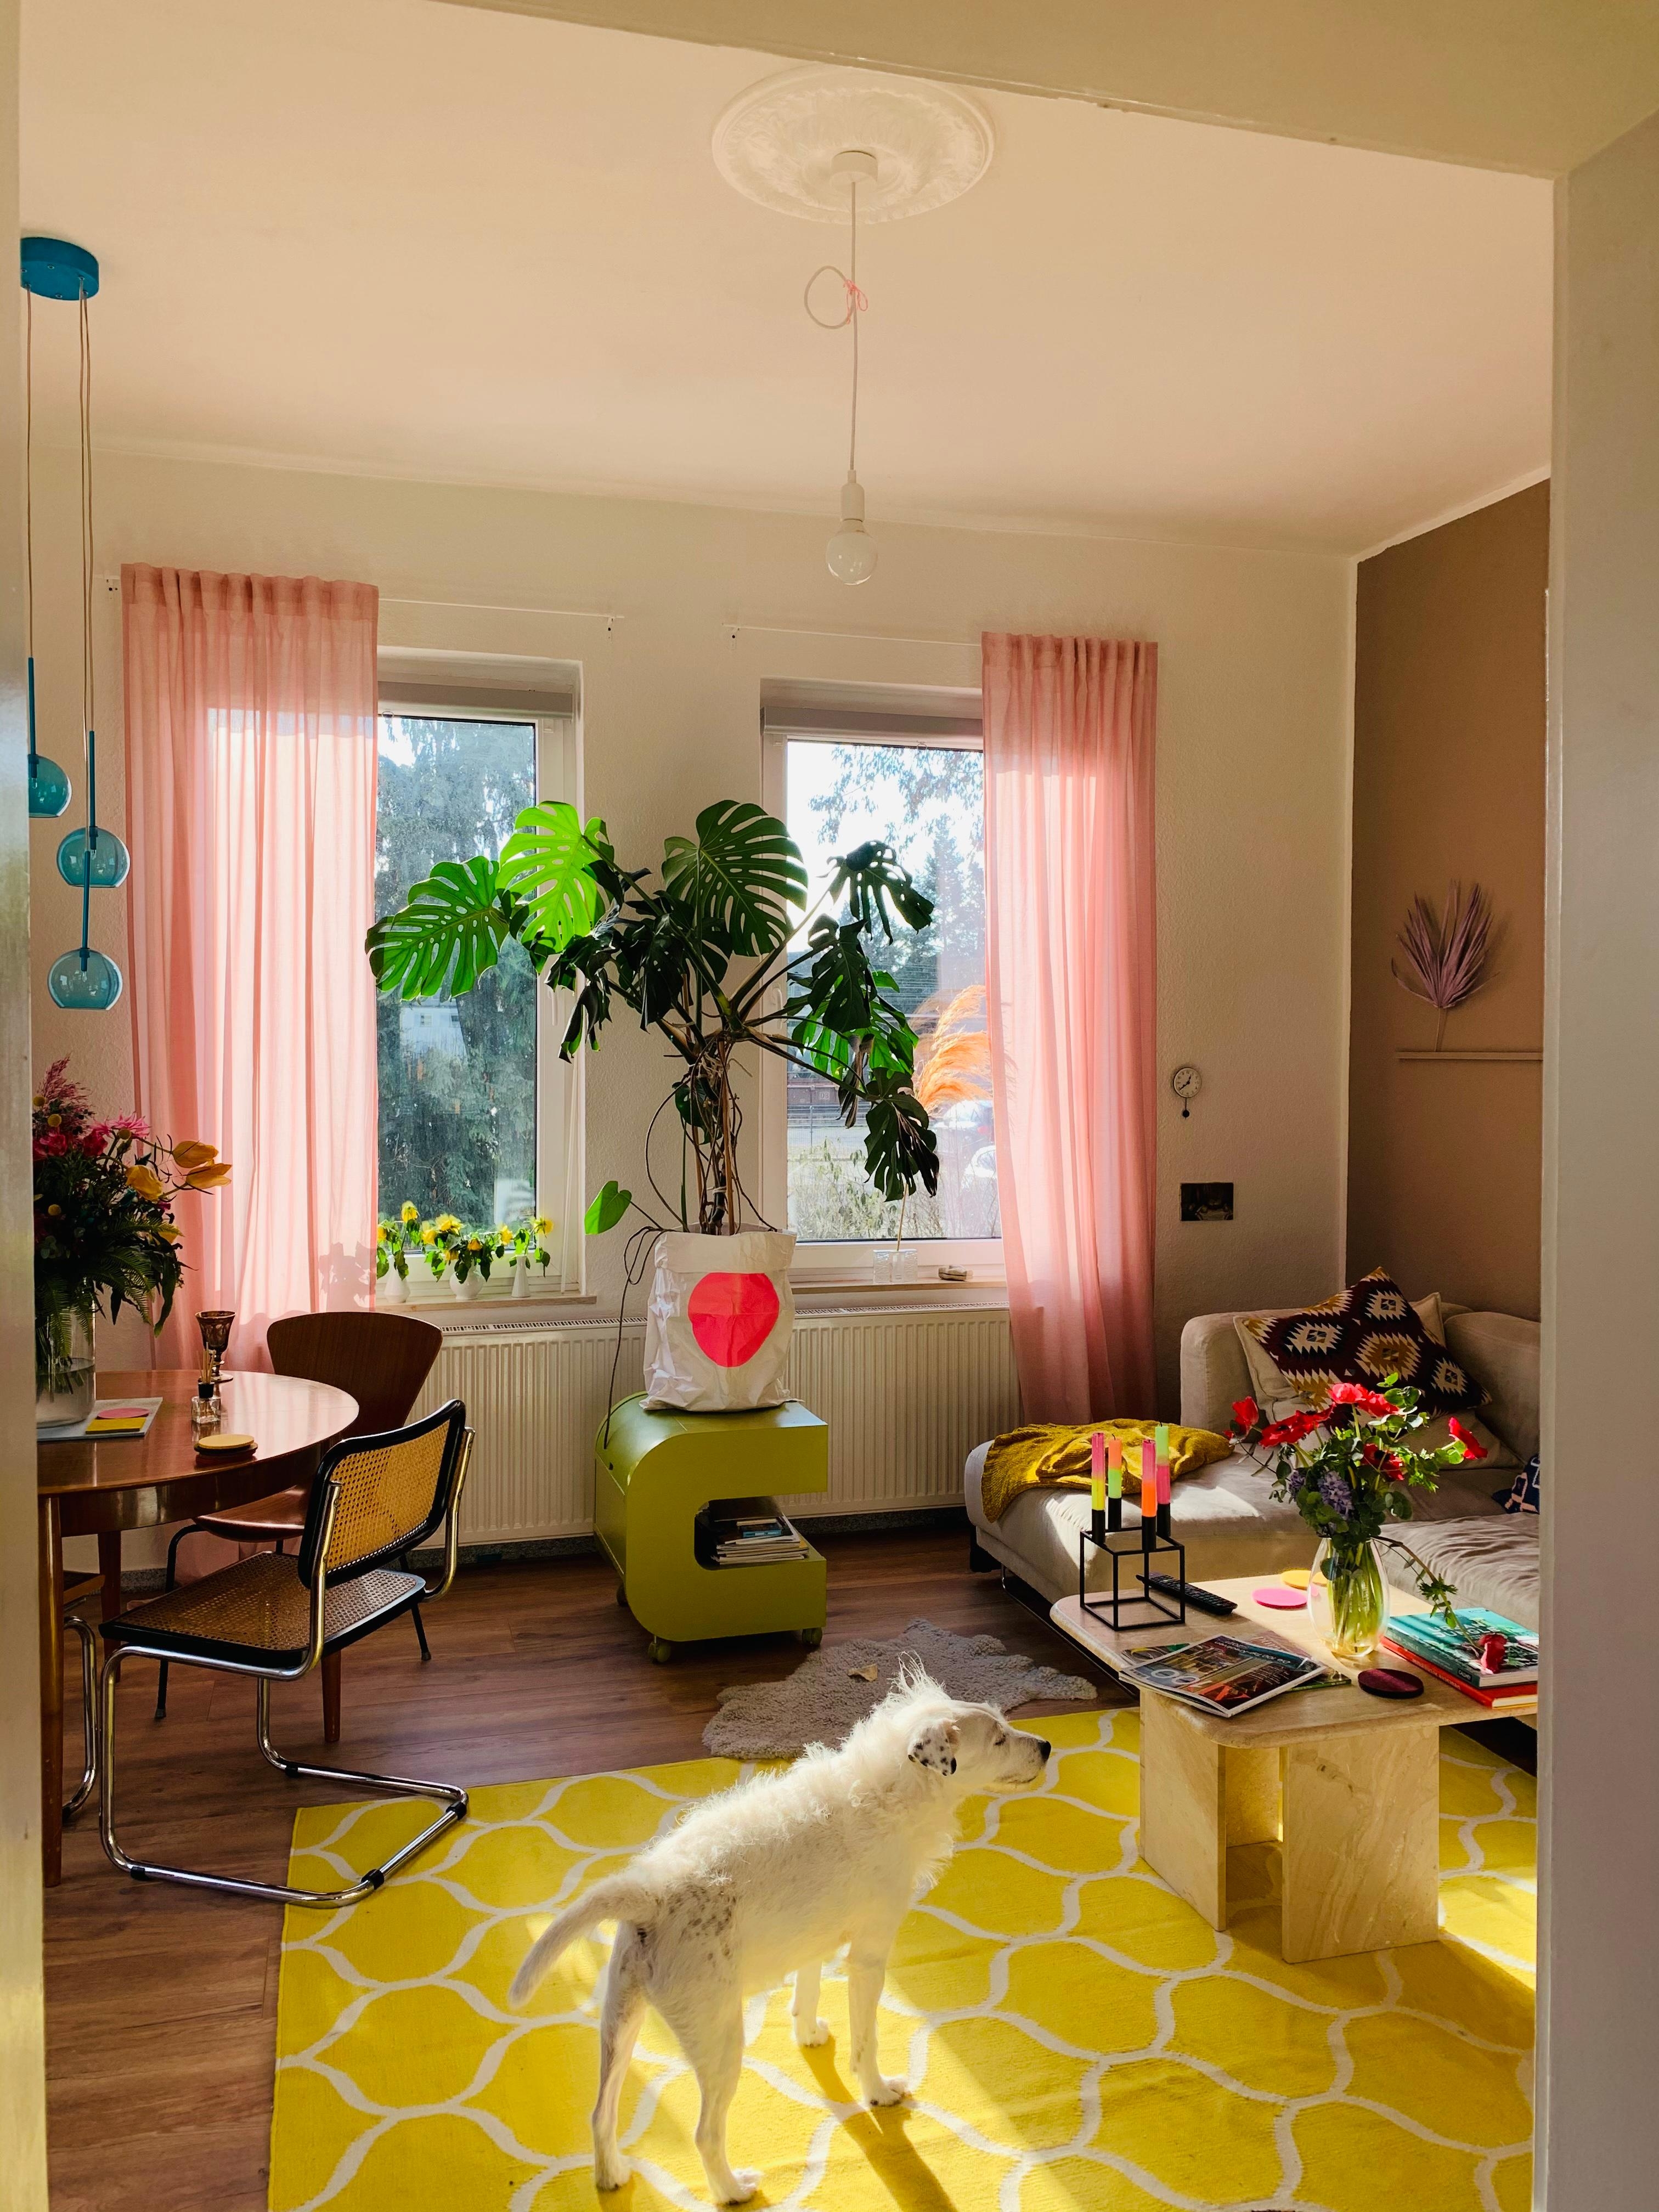 #sunlight #livingroom #farbeüberall #monstera #pflanzenliebe